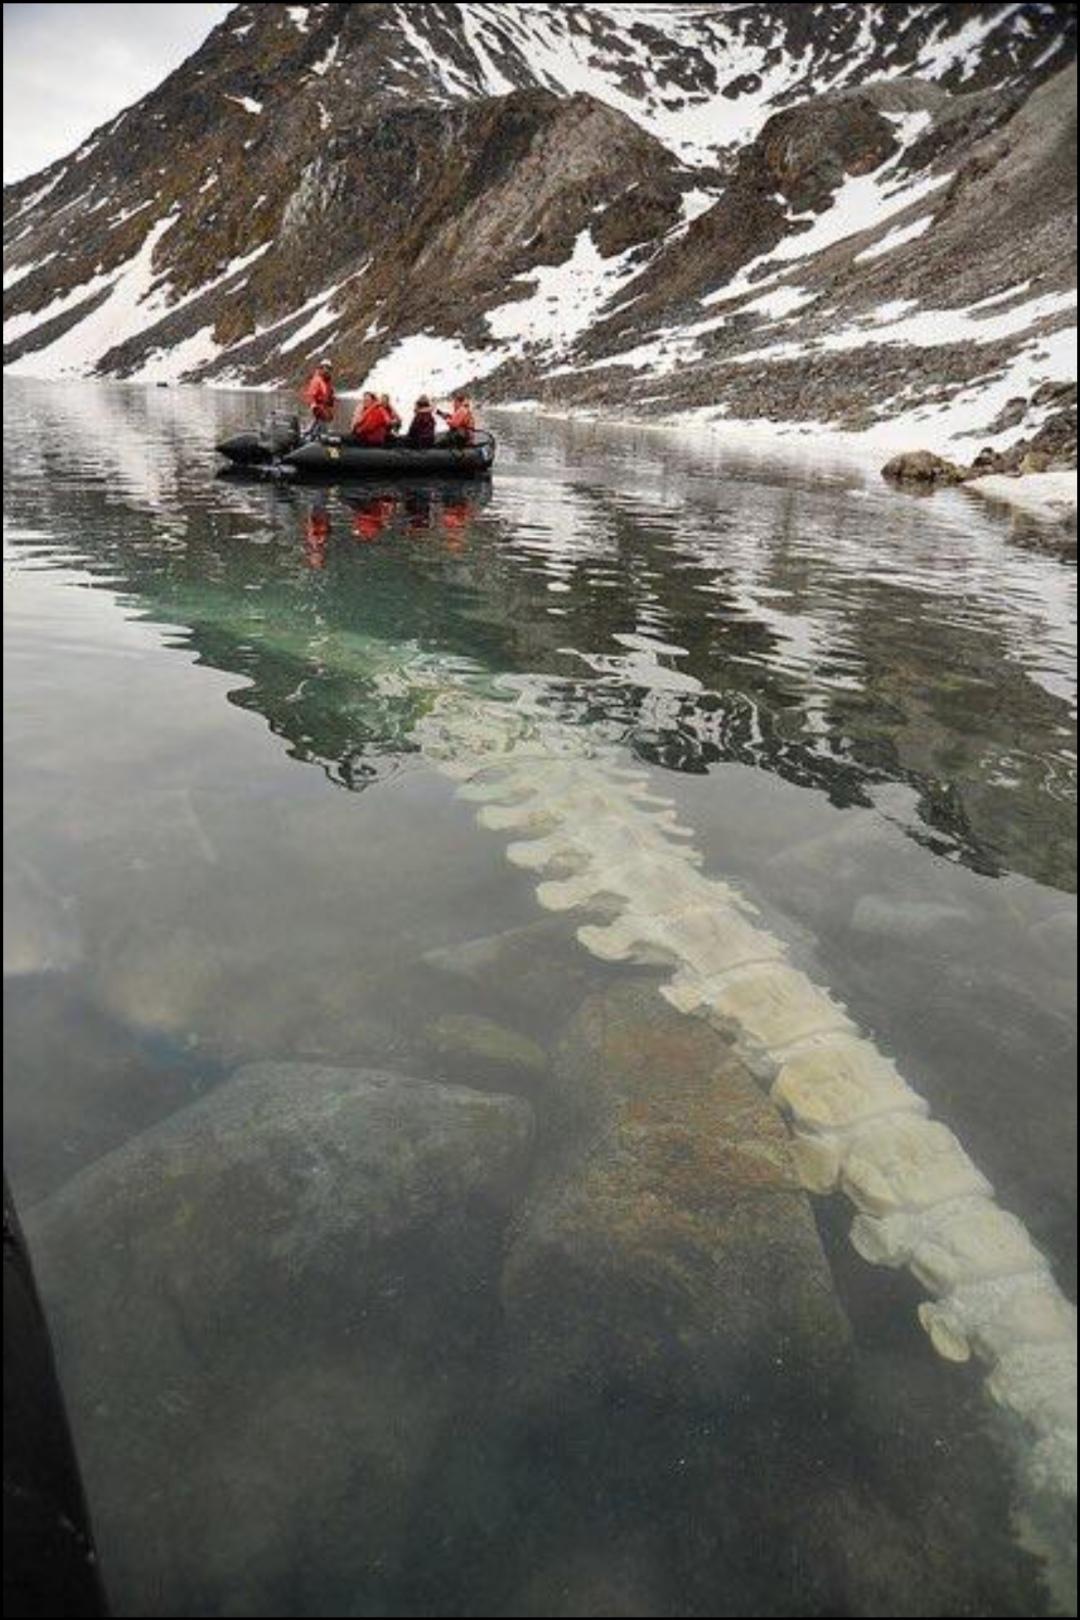 A fin whale vertebrae submerged in a Norwegian lake.